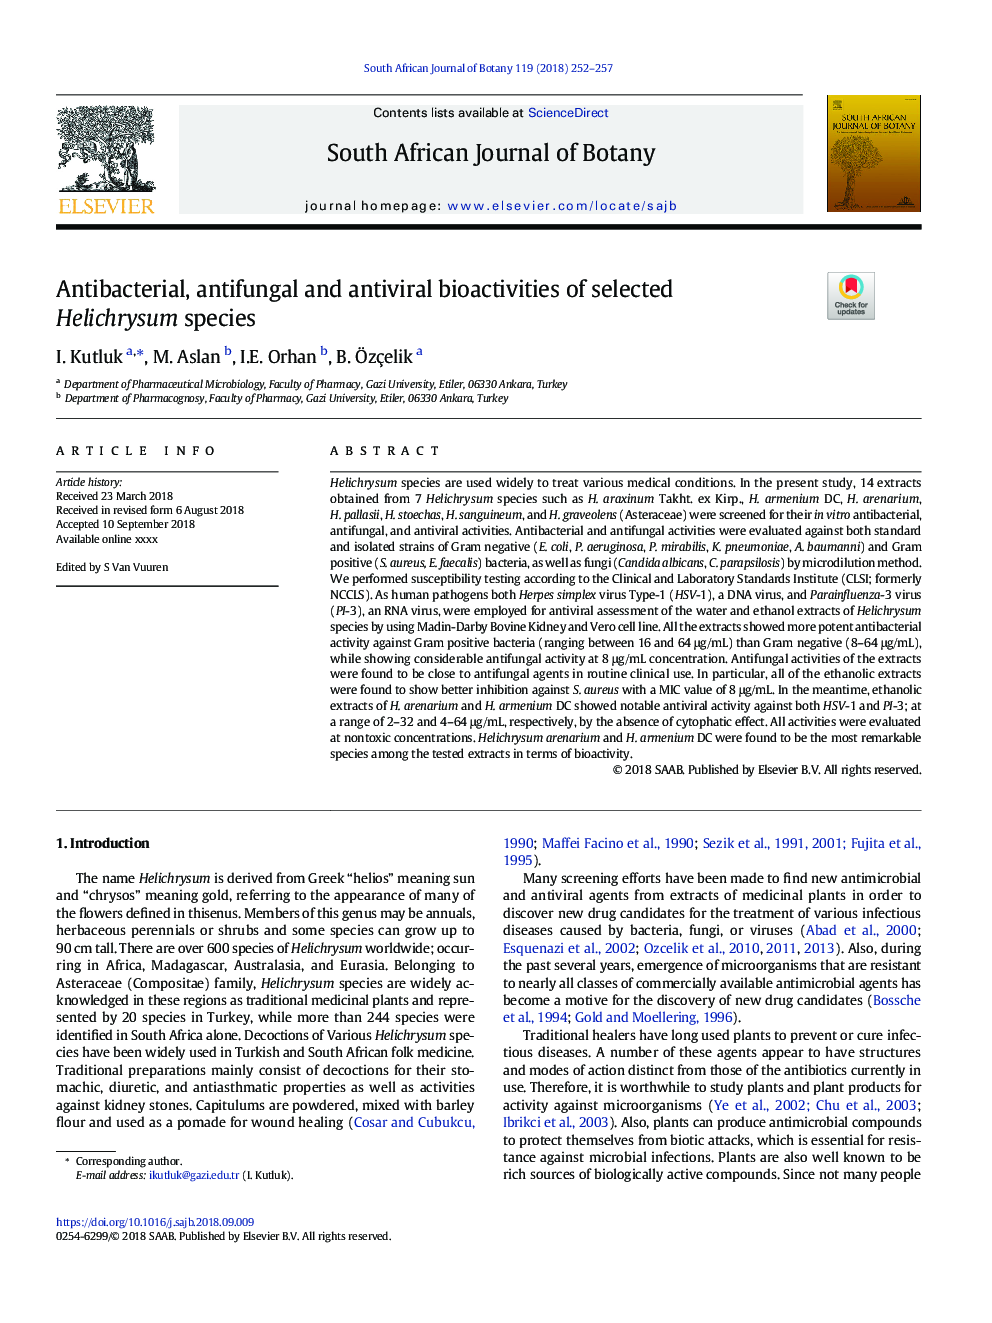 Antibacterial, antifungal and antiviral bioactivities of selected Helichrysum species